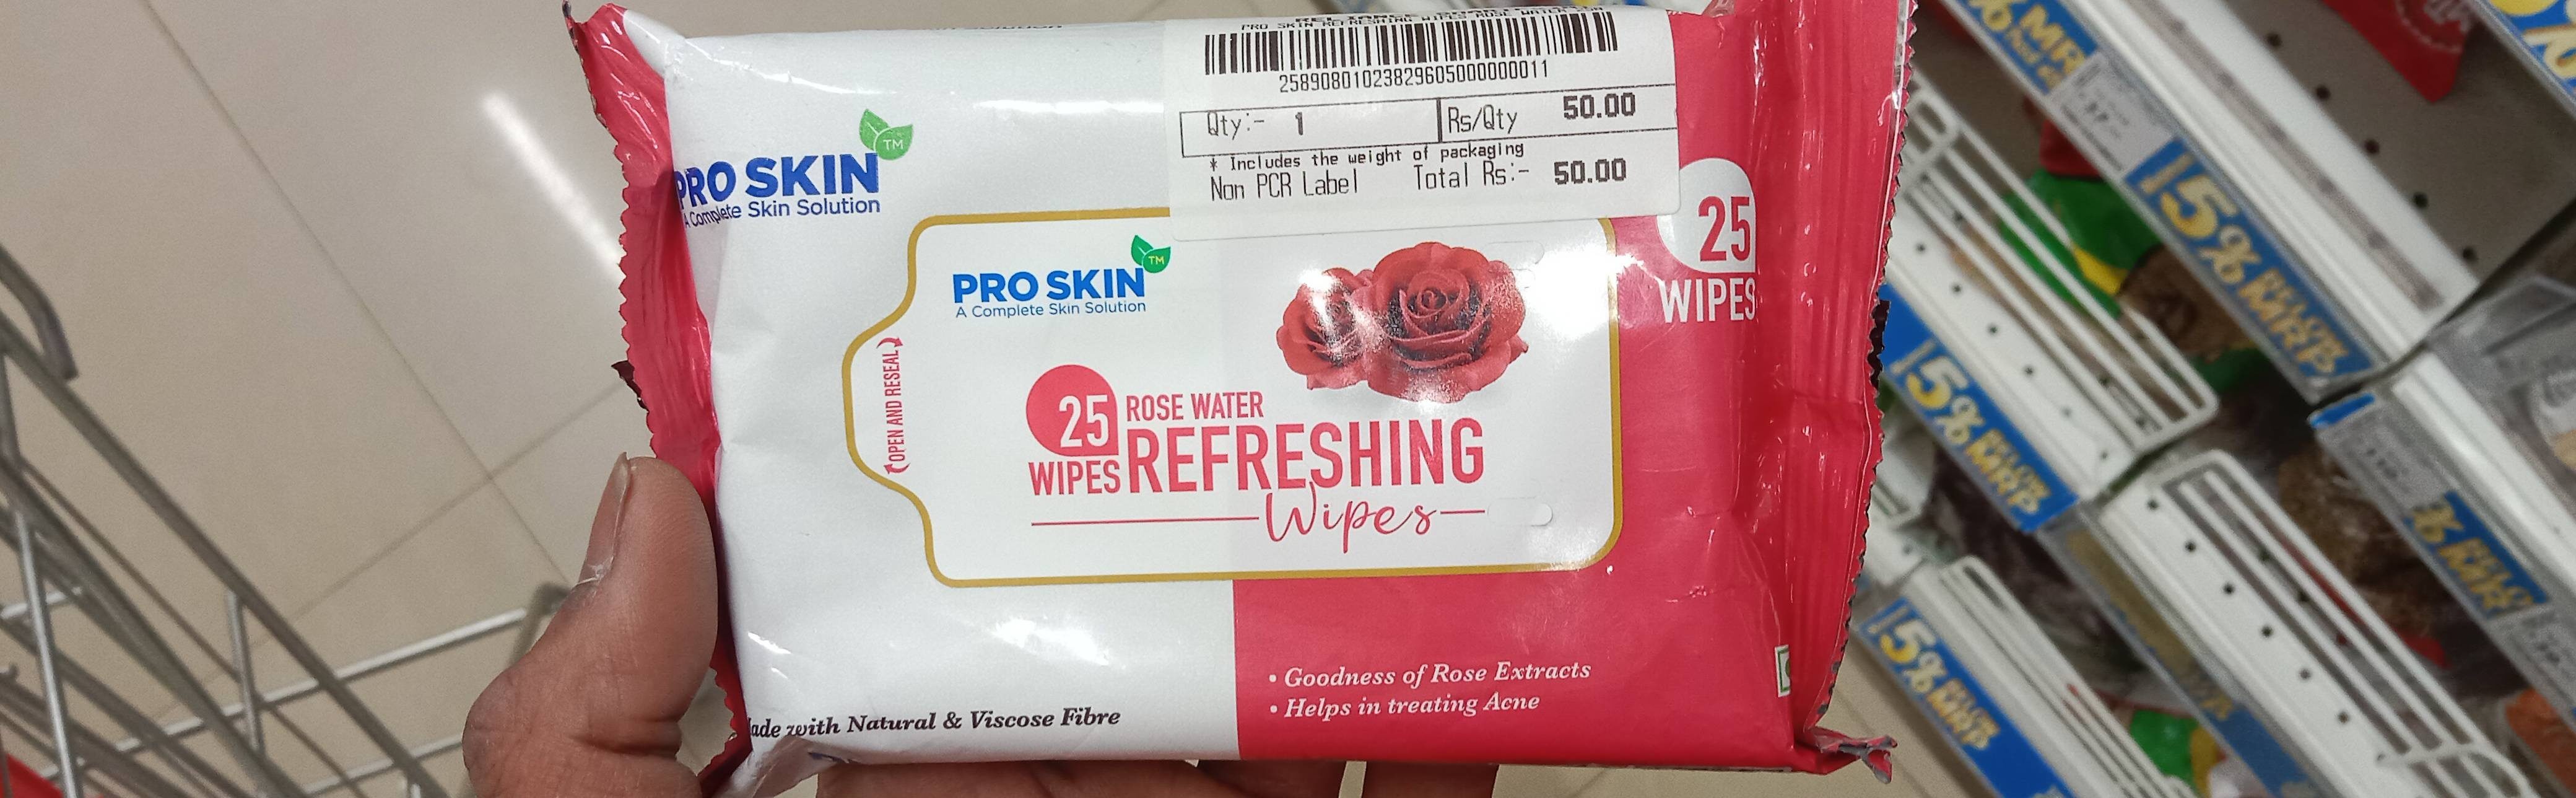 Pro skin Rose Water Wipes 25 - Tuote - en